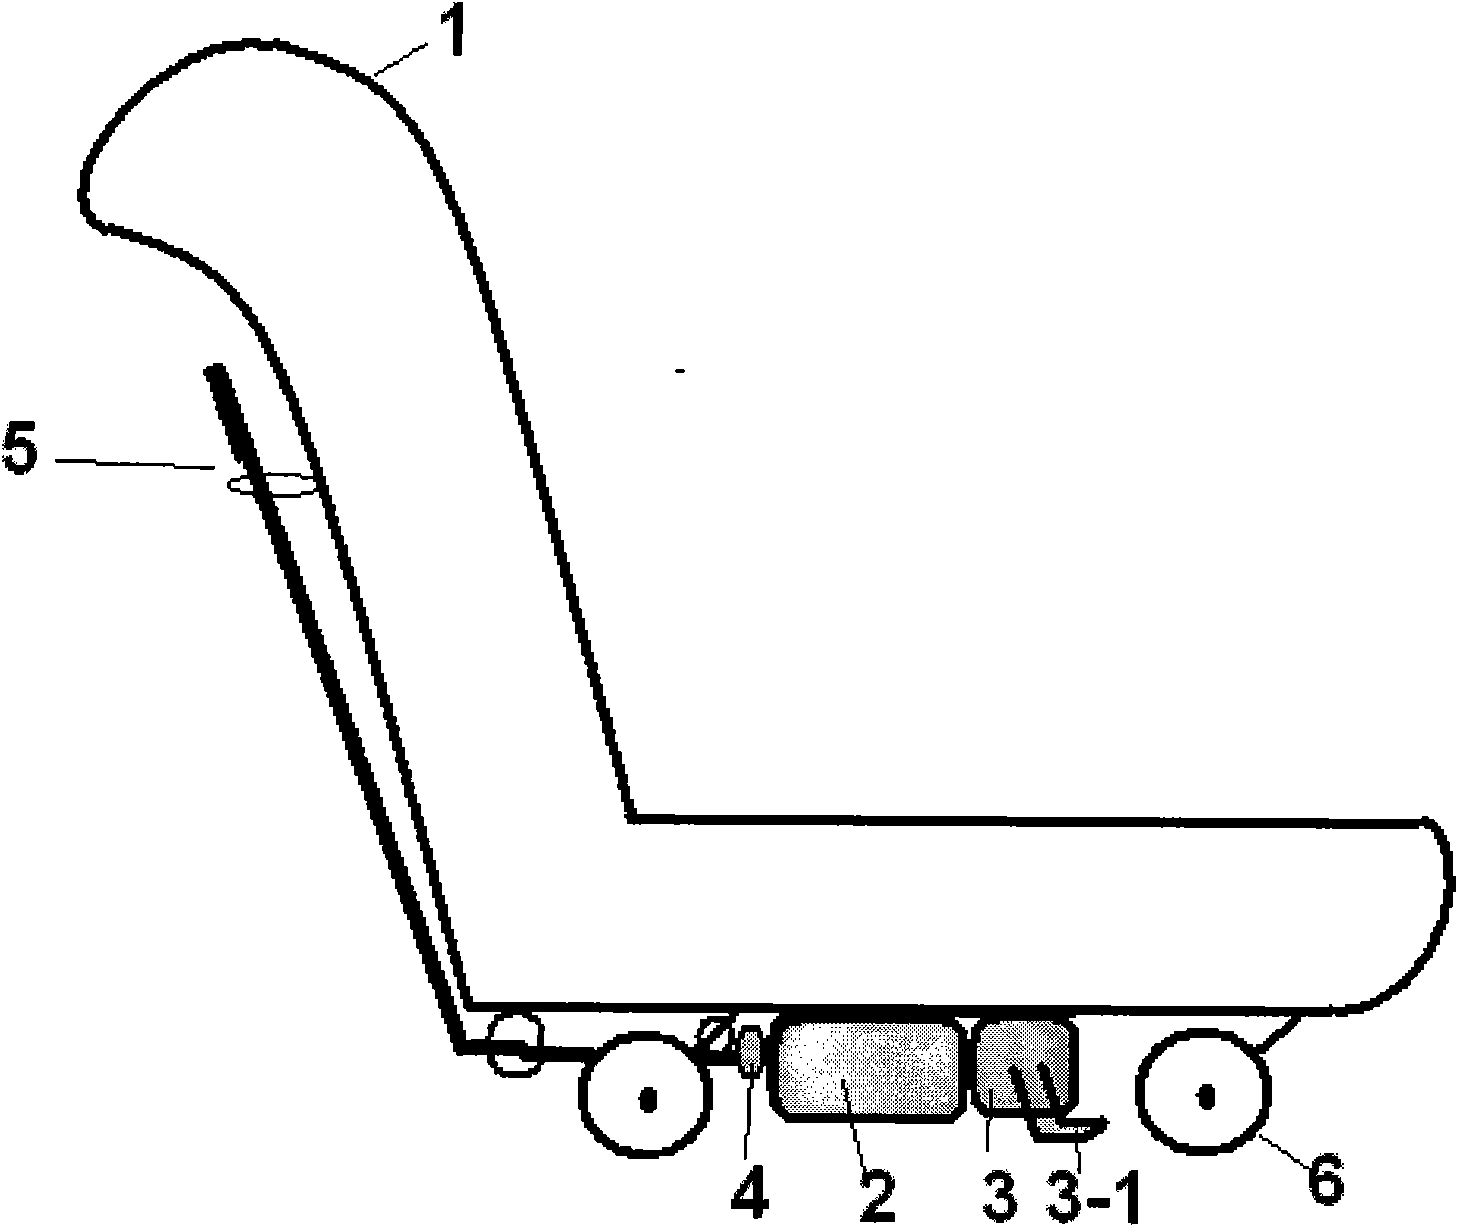 Mechanical power trolley